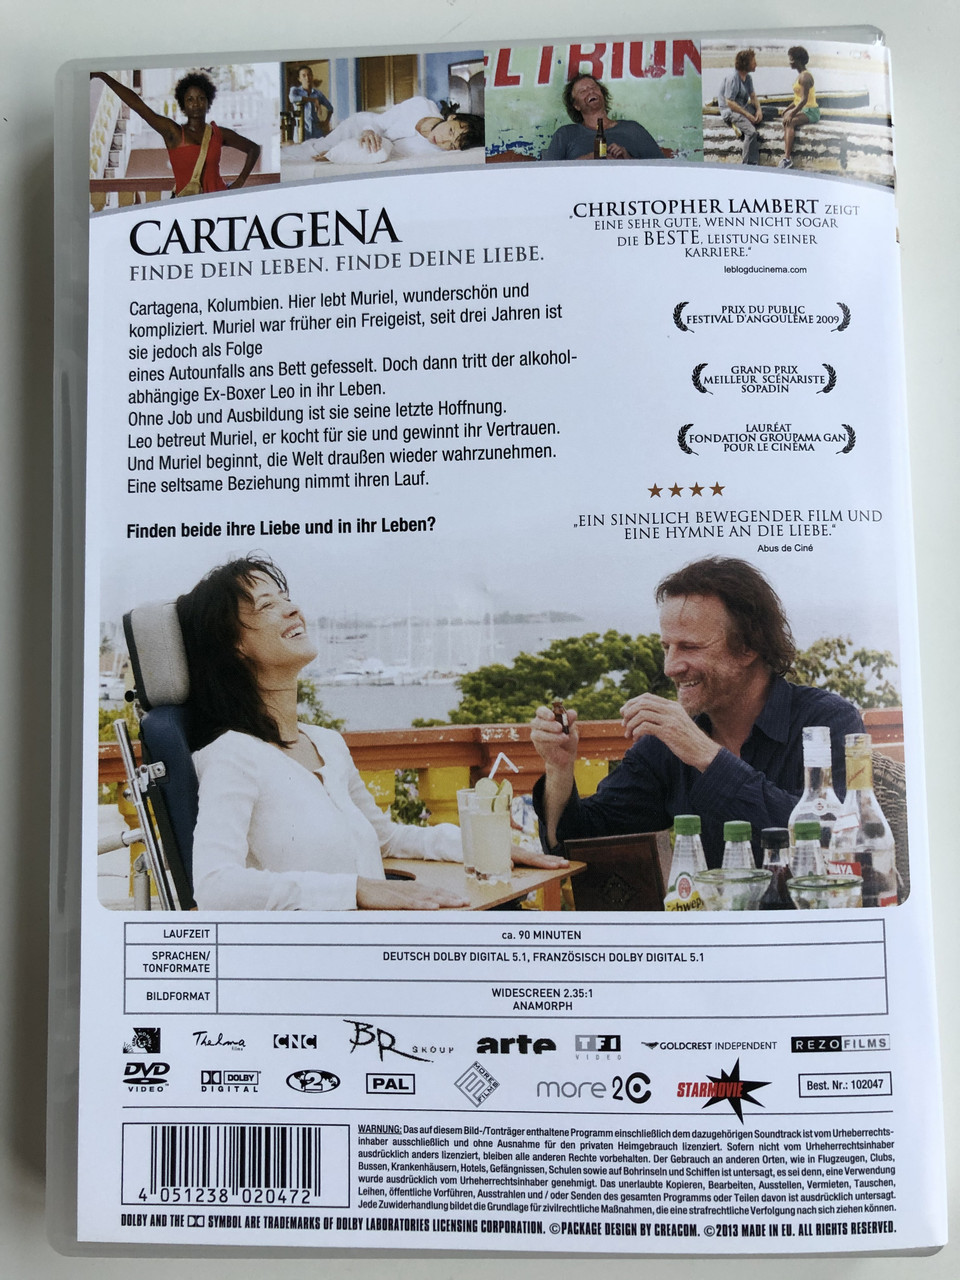 L'homme de chevet DVD 2009 Cartagena / Directed by Alain Monne / Starring:  Sophie Marceau, Christopher Lambert, Margarita Rosa de Francisco -  bibleinmylanguage